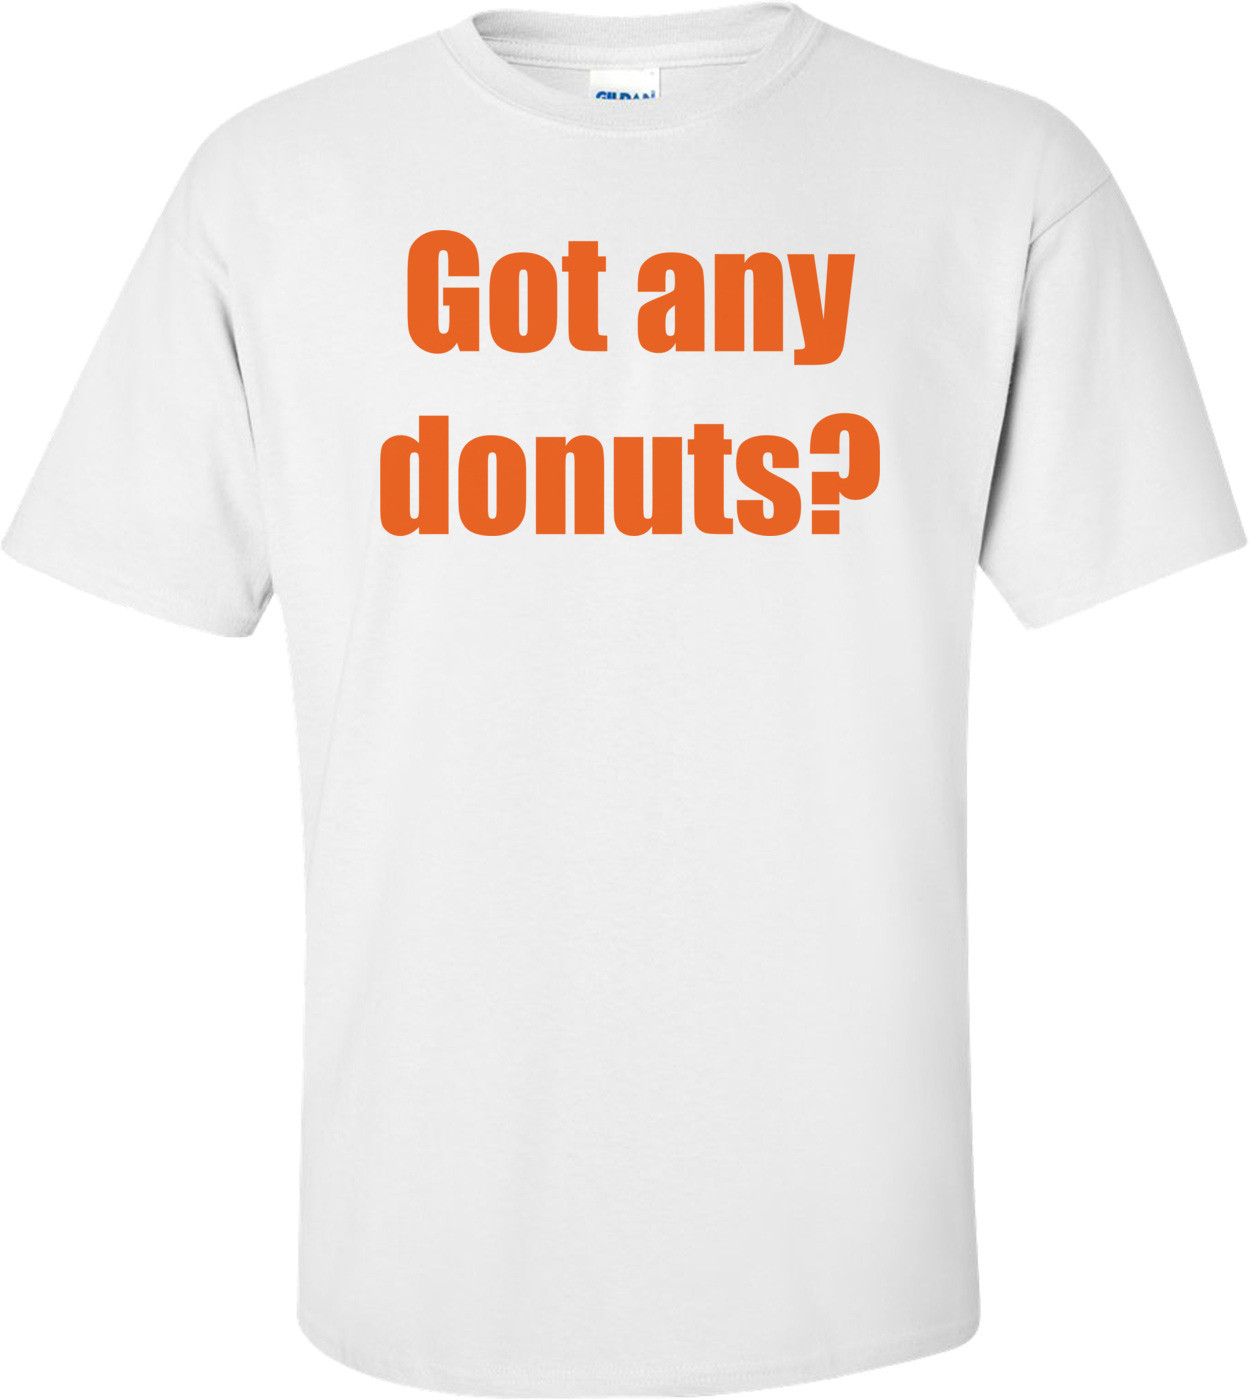 Got any donuts? Shirt